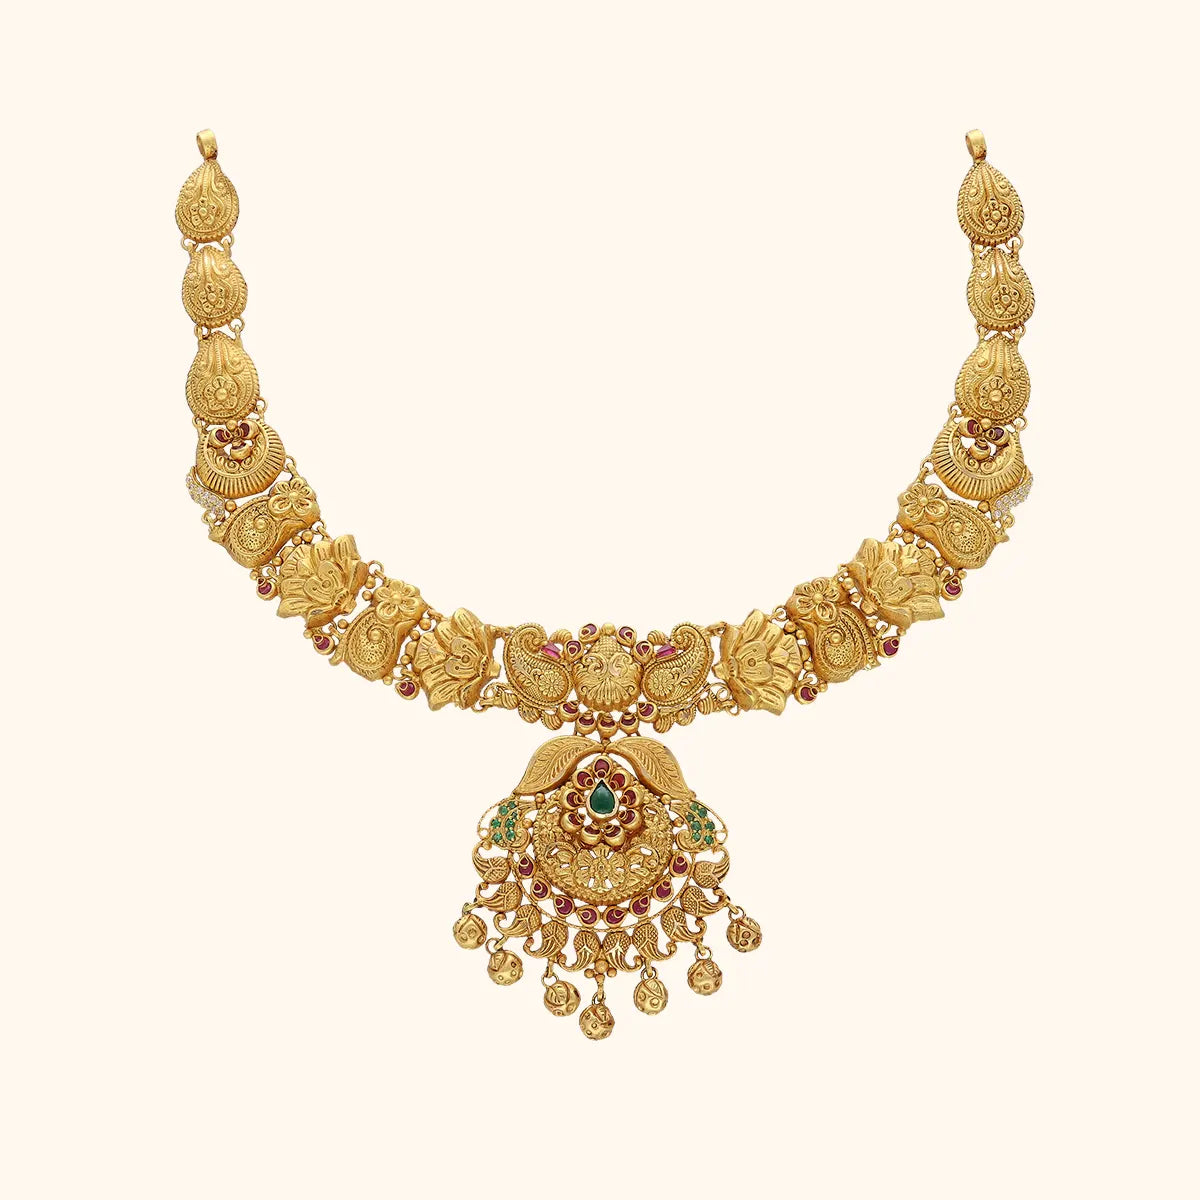 22 carat latest gold necklace | Instagram